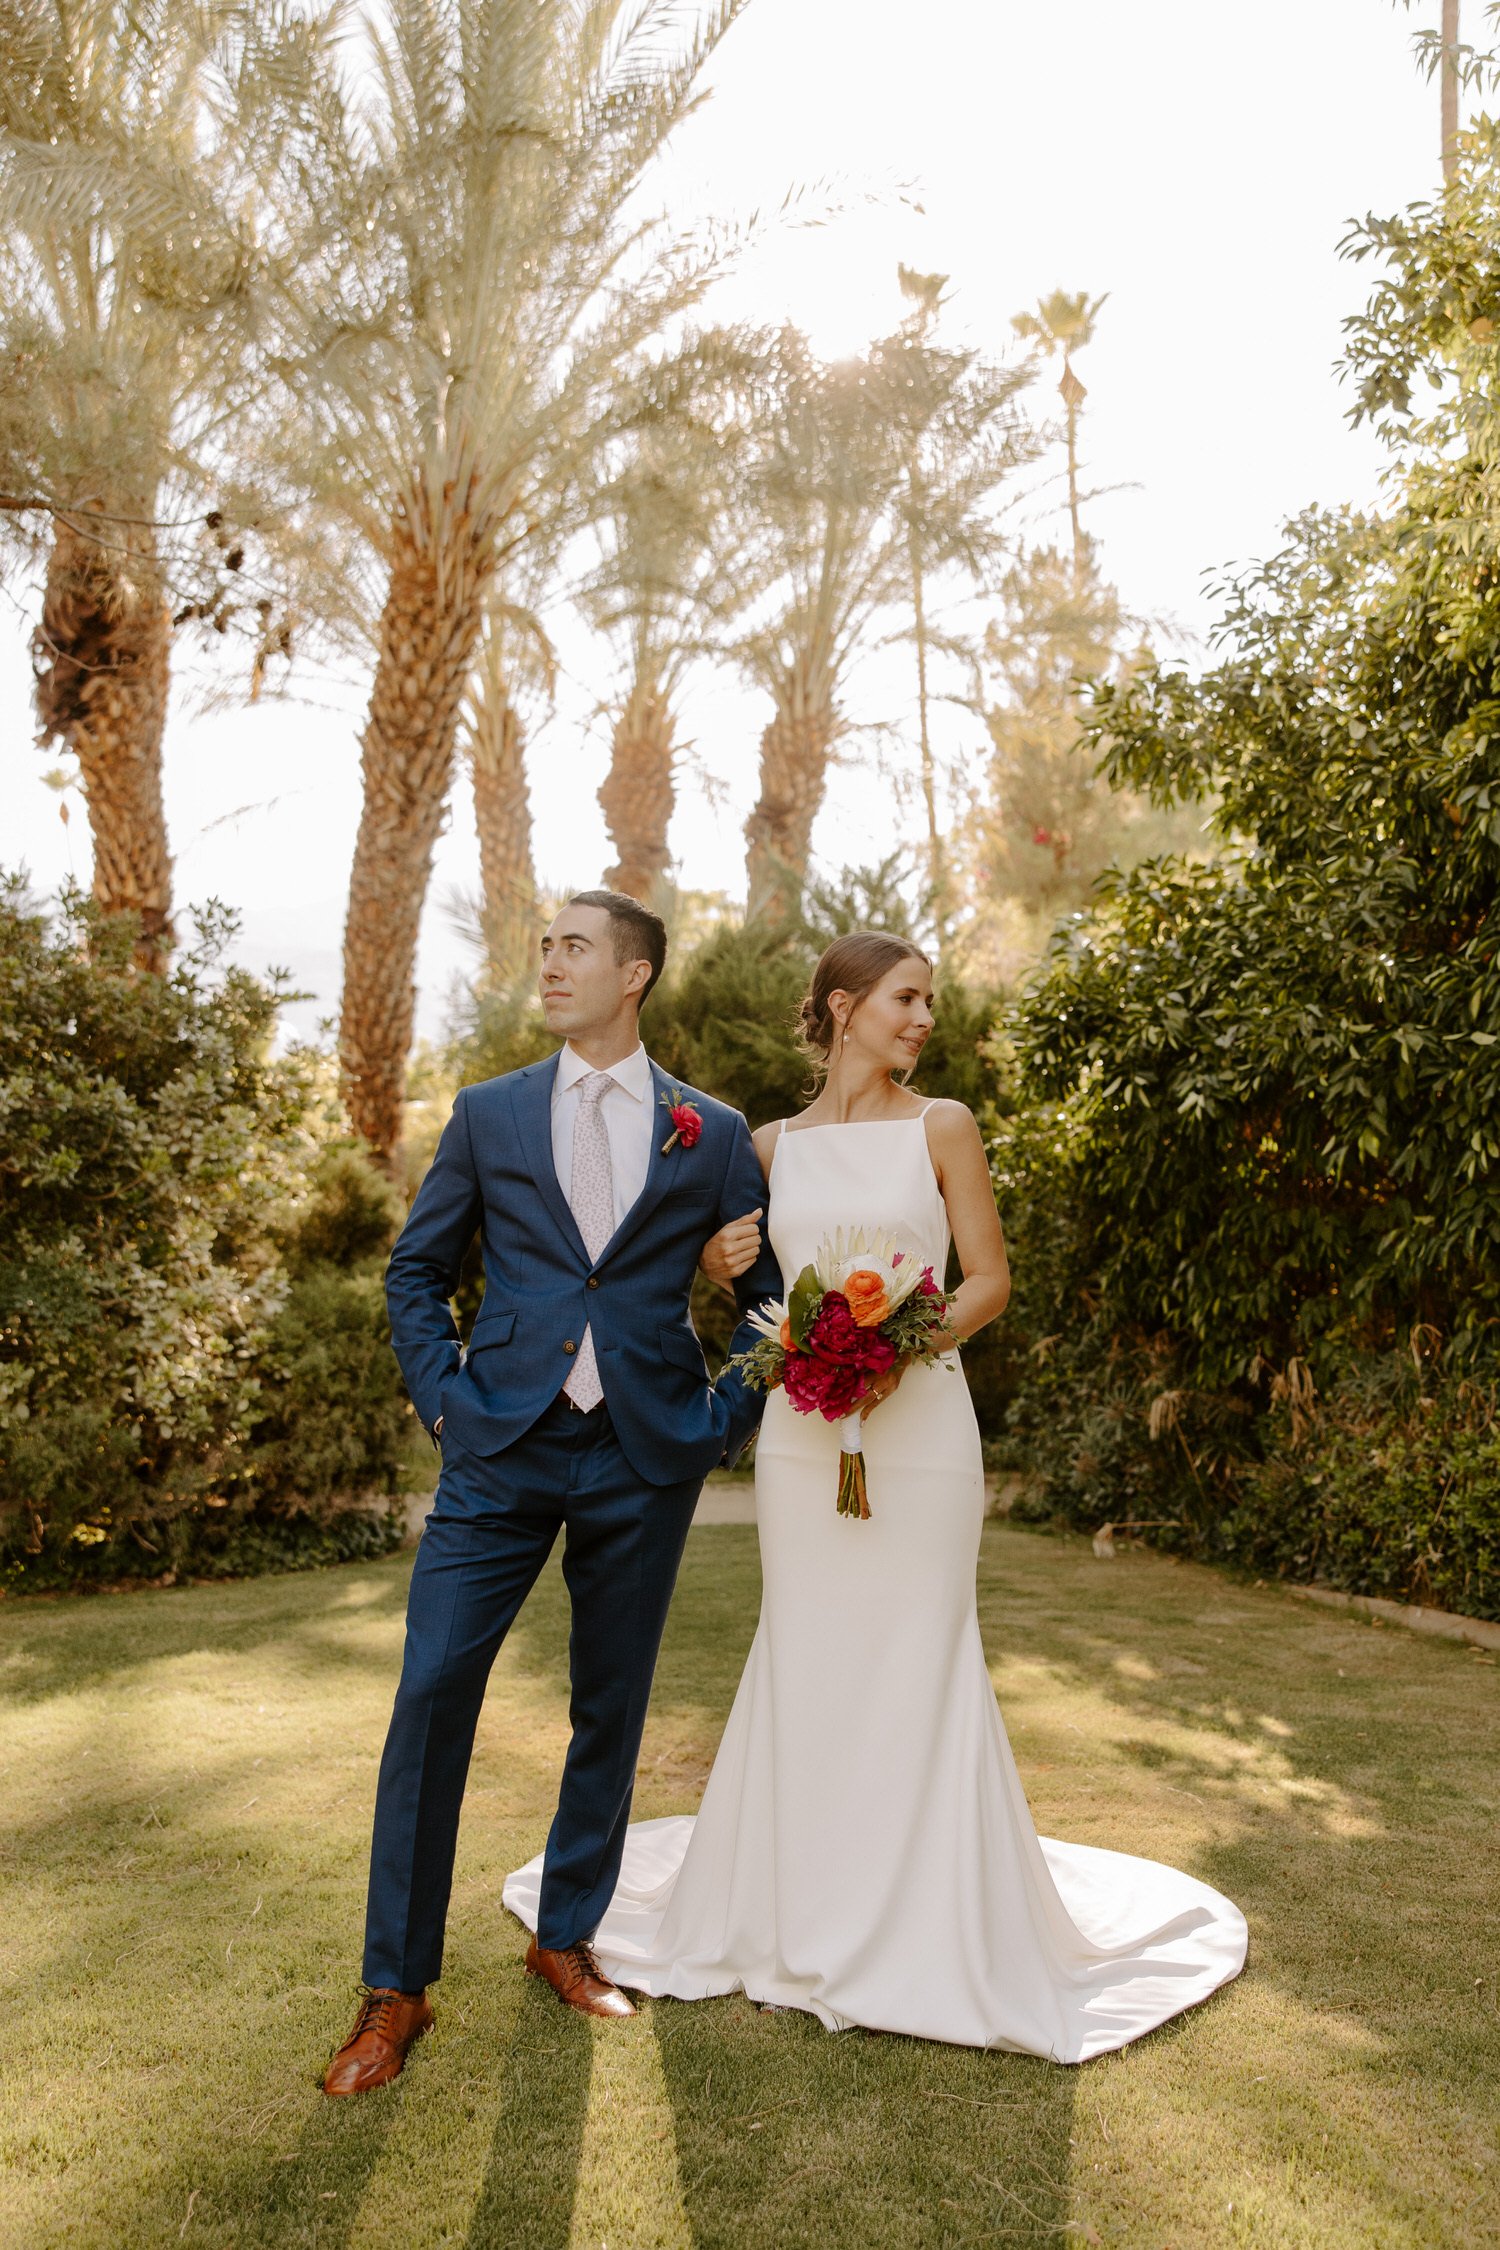 Modern-Parker-Palm-Springs-Wedding-Photographer-Brianna-Broyles-Photography-32.jpg